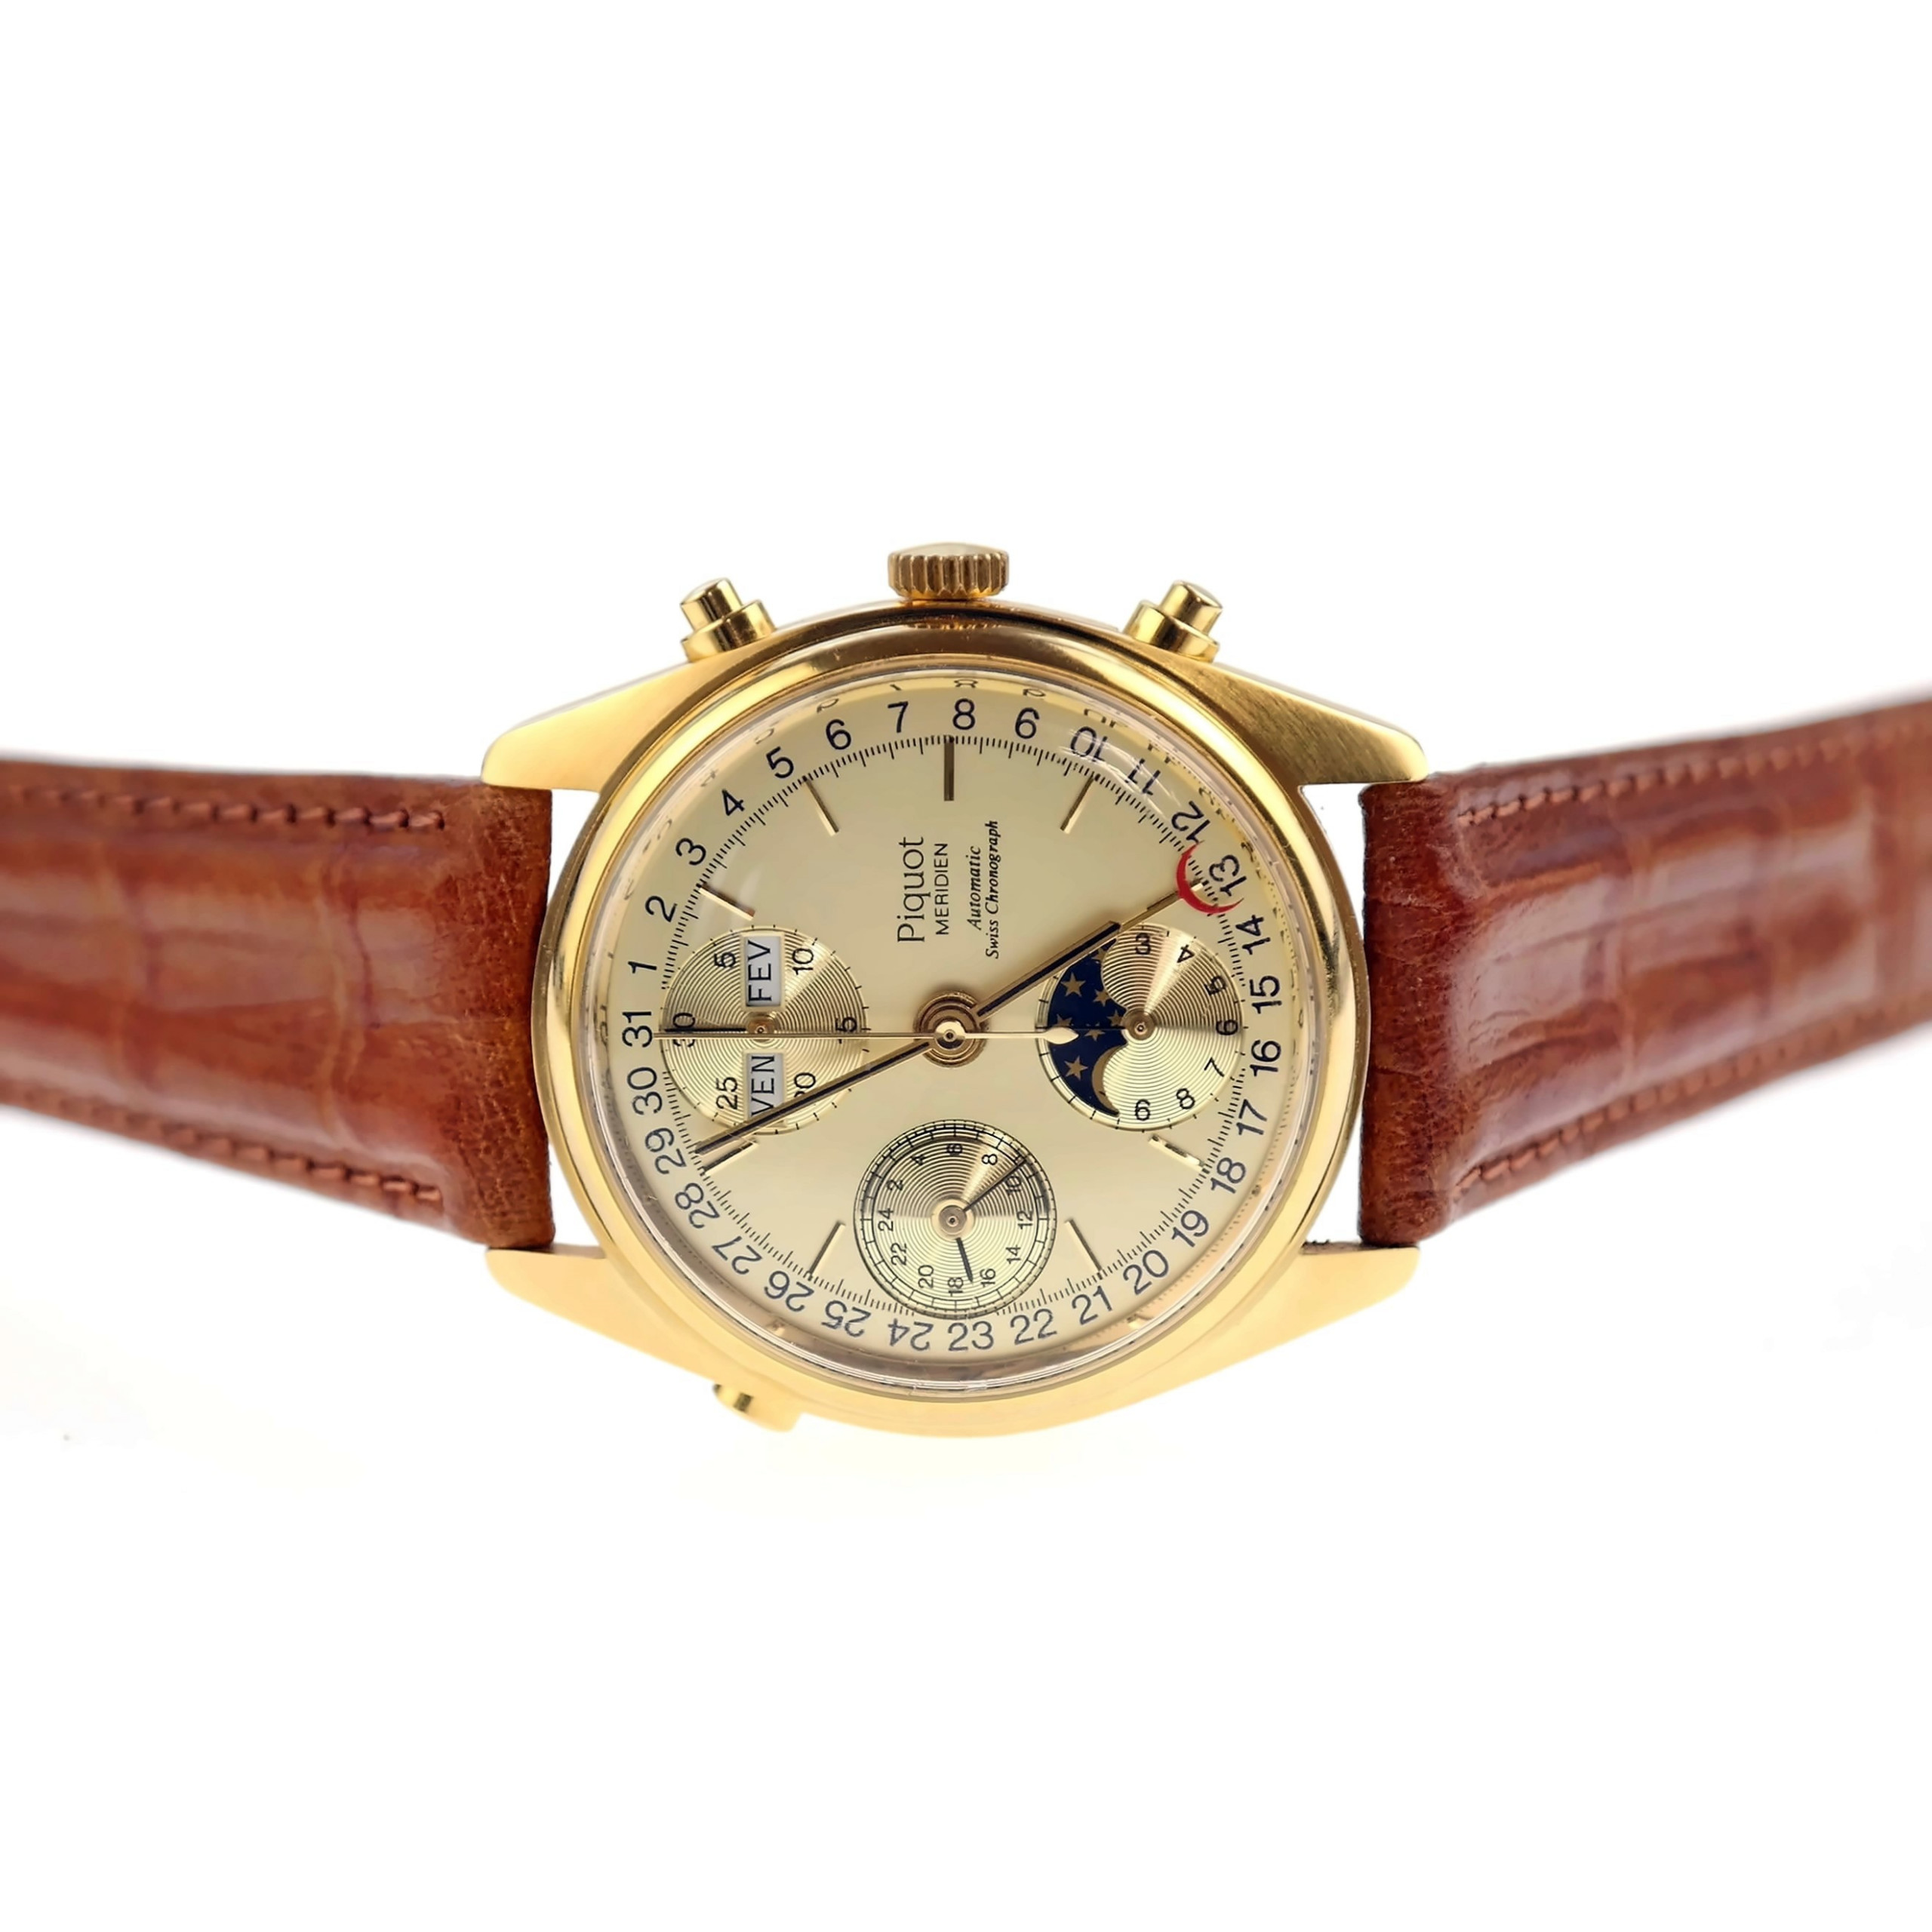 PIQUOT MERIDIEN Swiss Automatic Chronograph Moon Phase Watch Valjoux 7751 -  Online Watch Deals